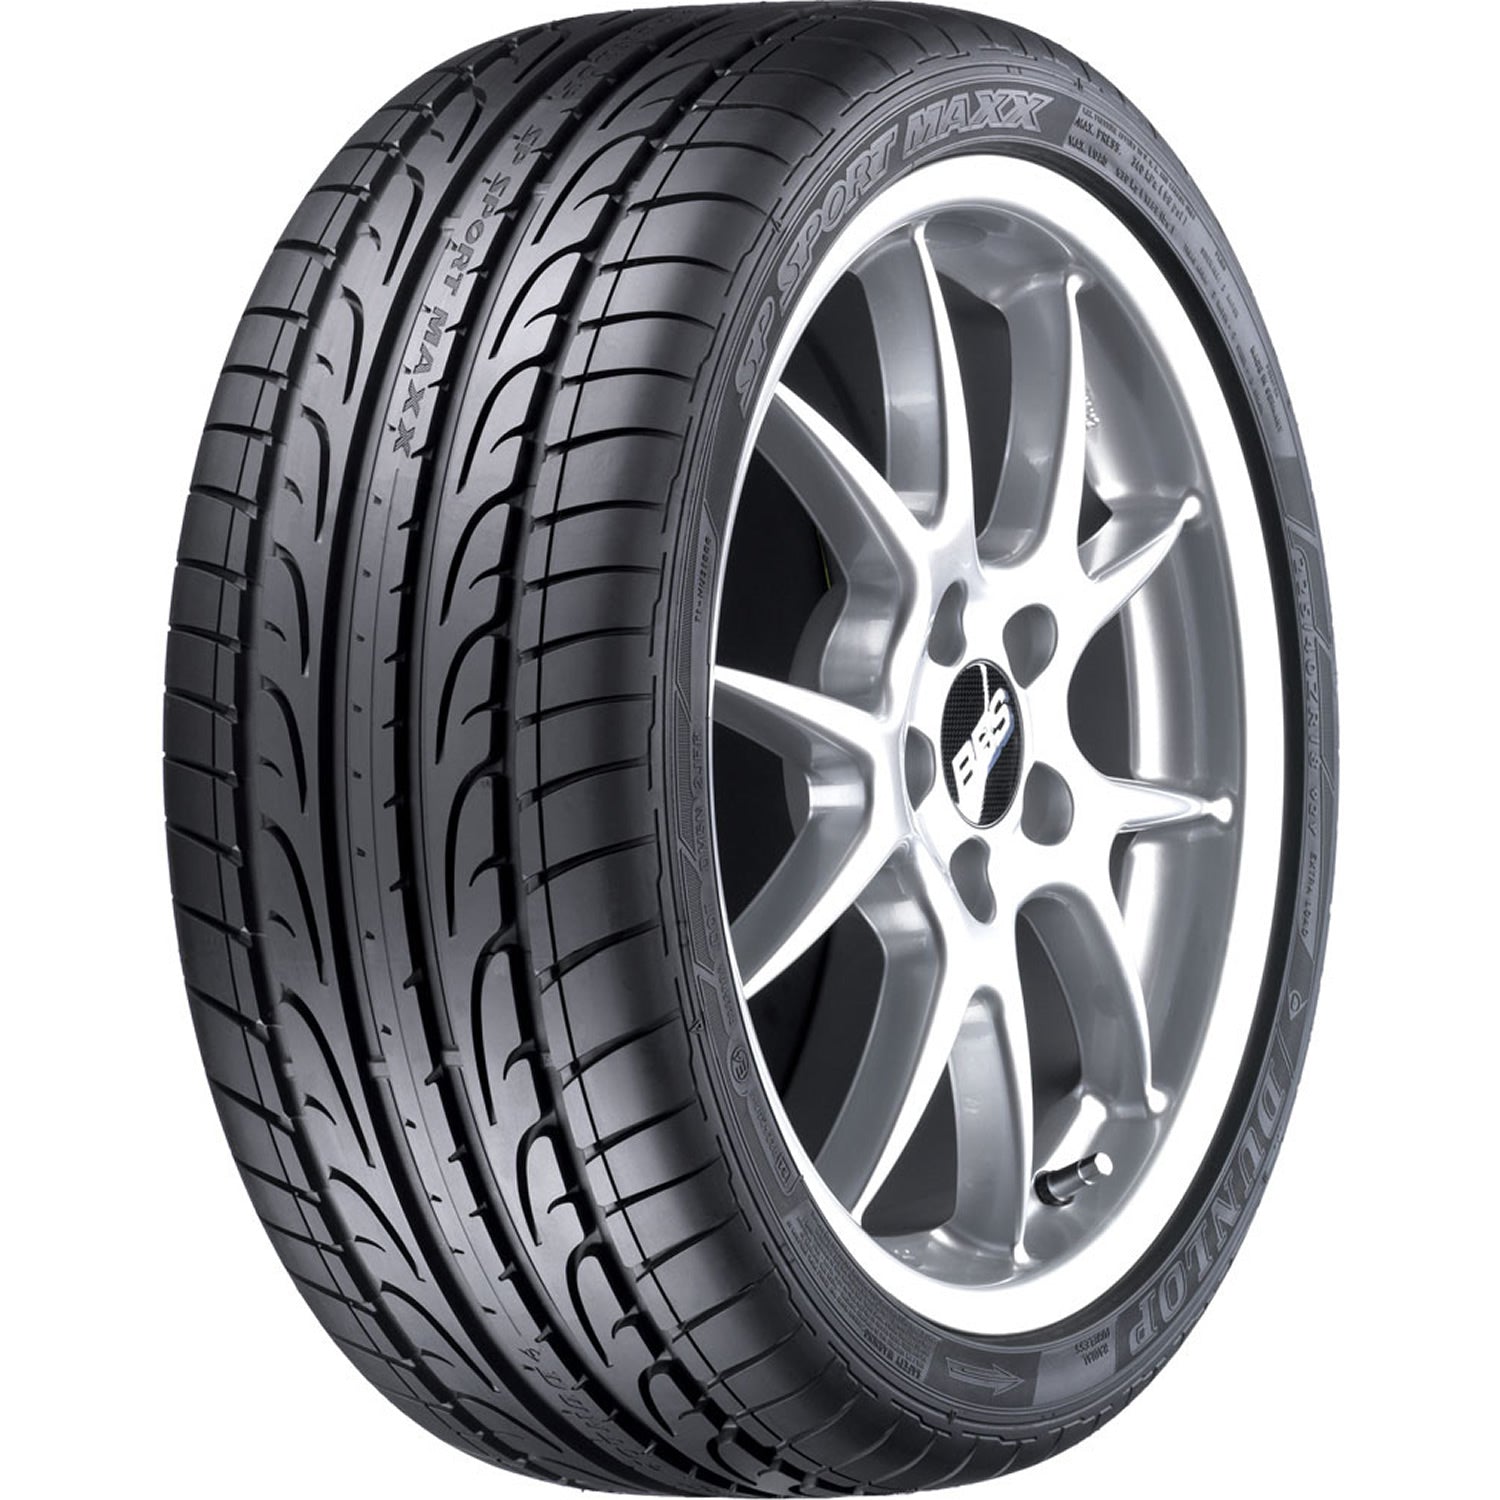 DUNLOP SP SPORT MAXX 295/35R21 (29.1X11.9R 21) Tires